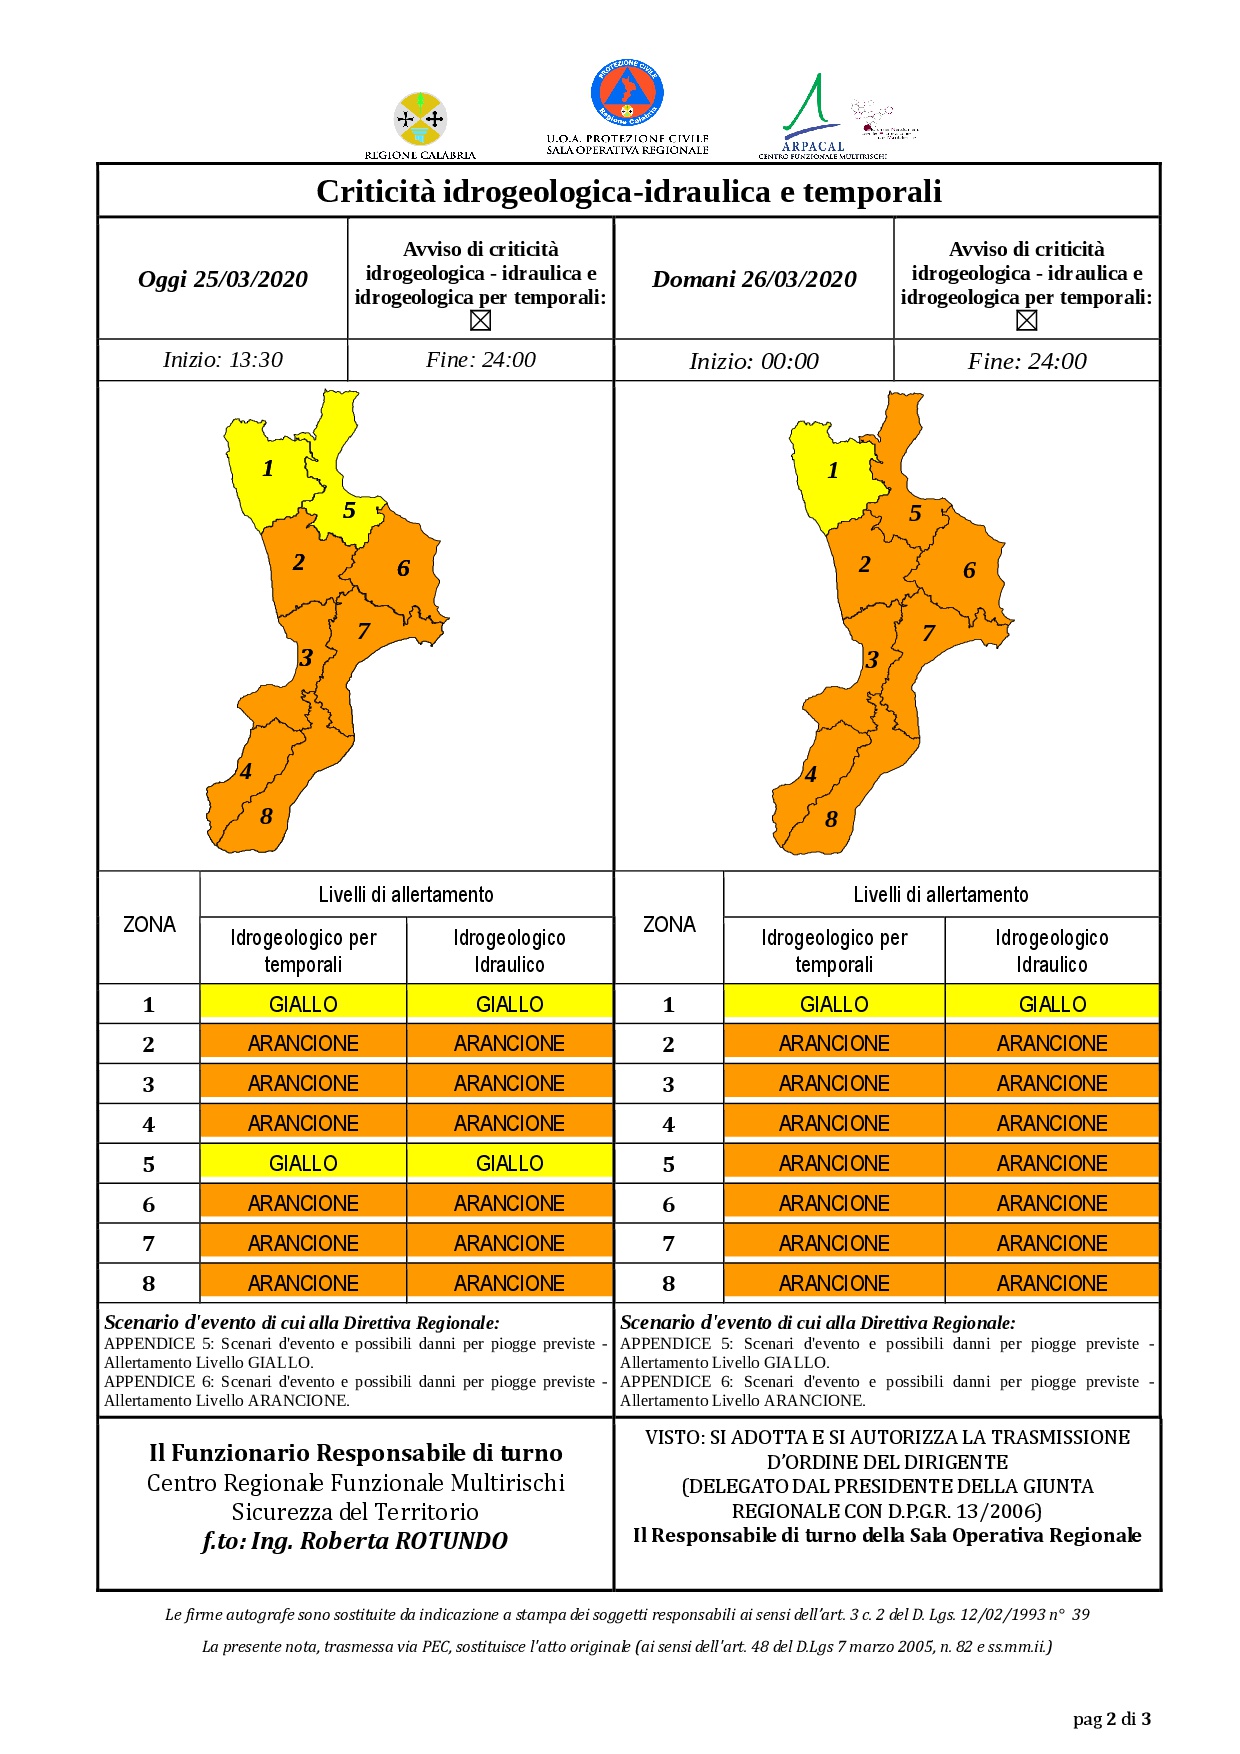 Criticità idrogeologica-idraulica e temporali in Calabria 25-03-2020